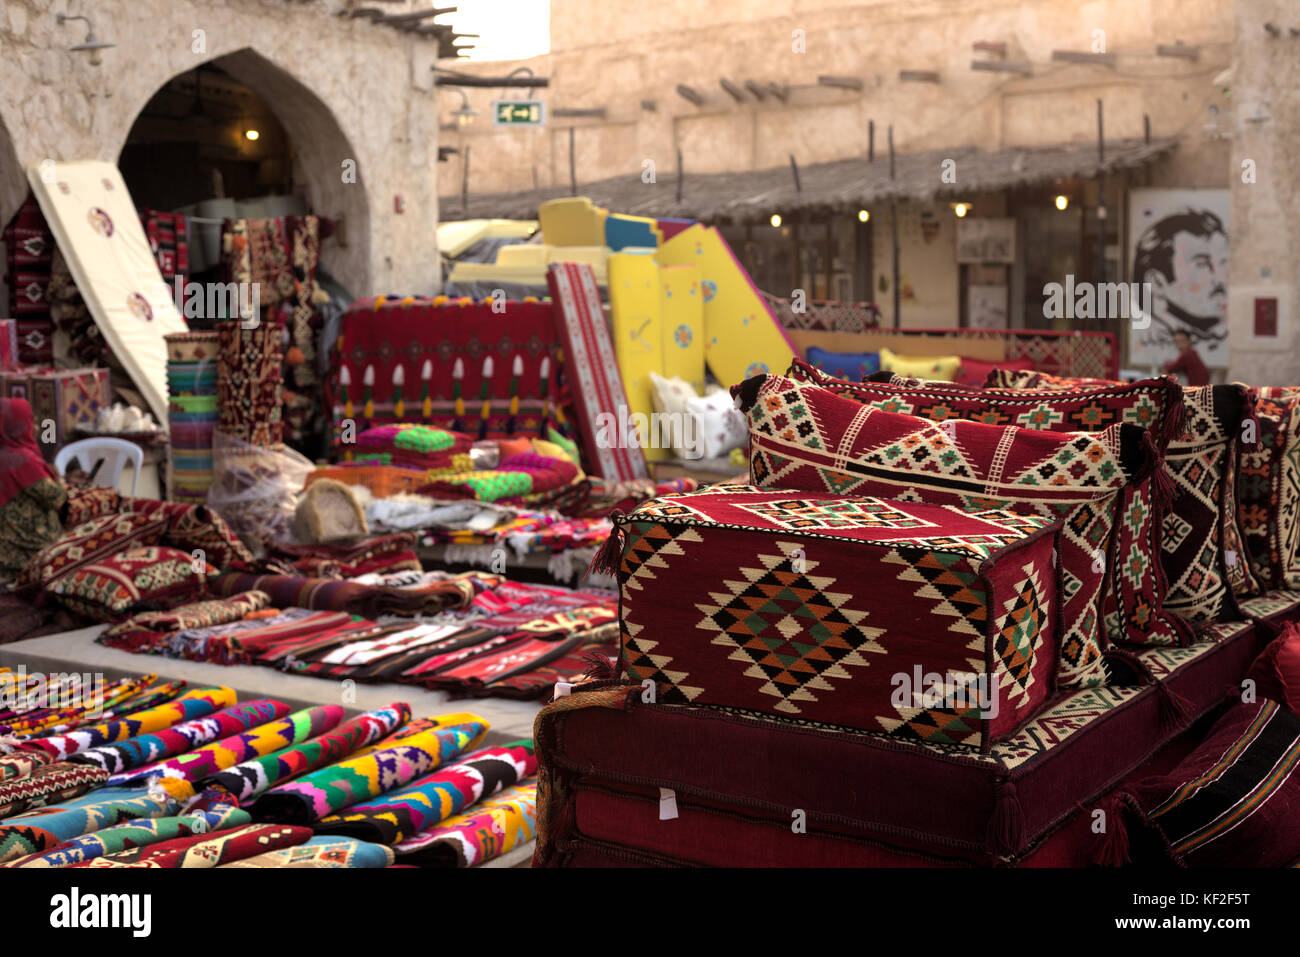 SOUQ WAQIF, DOHA, QATAR - OCTOBER 23, 2017: Textiles on sale in Souq Waqif in Qatar, Arabia. Stock Photo